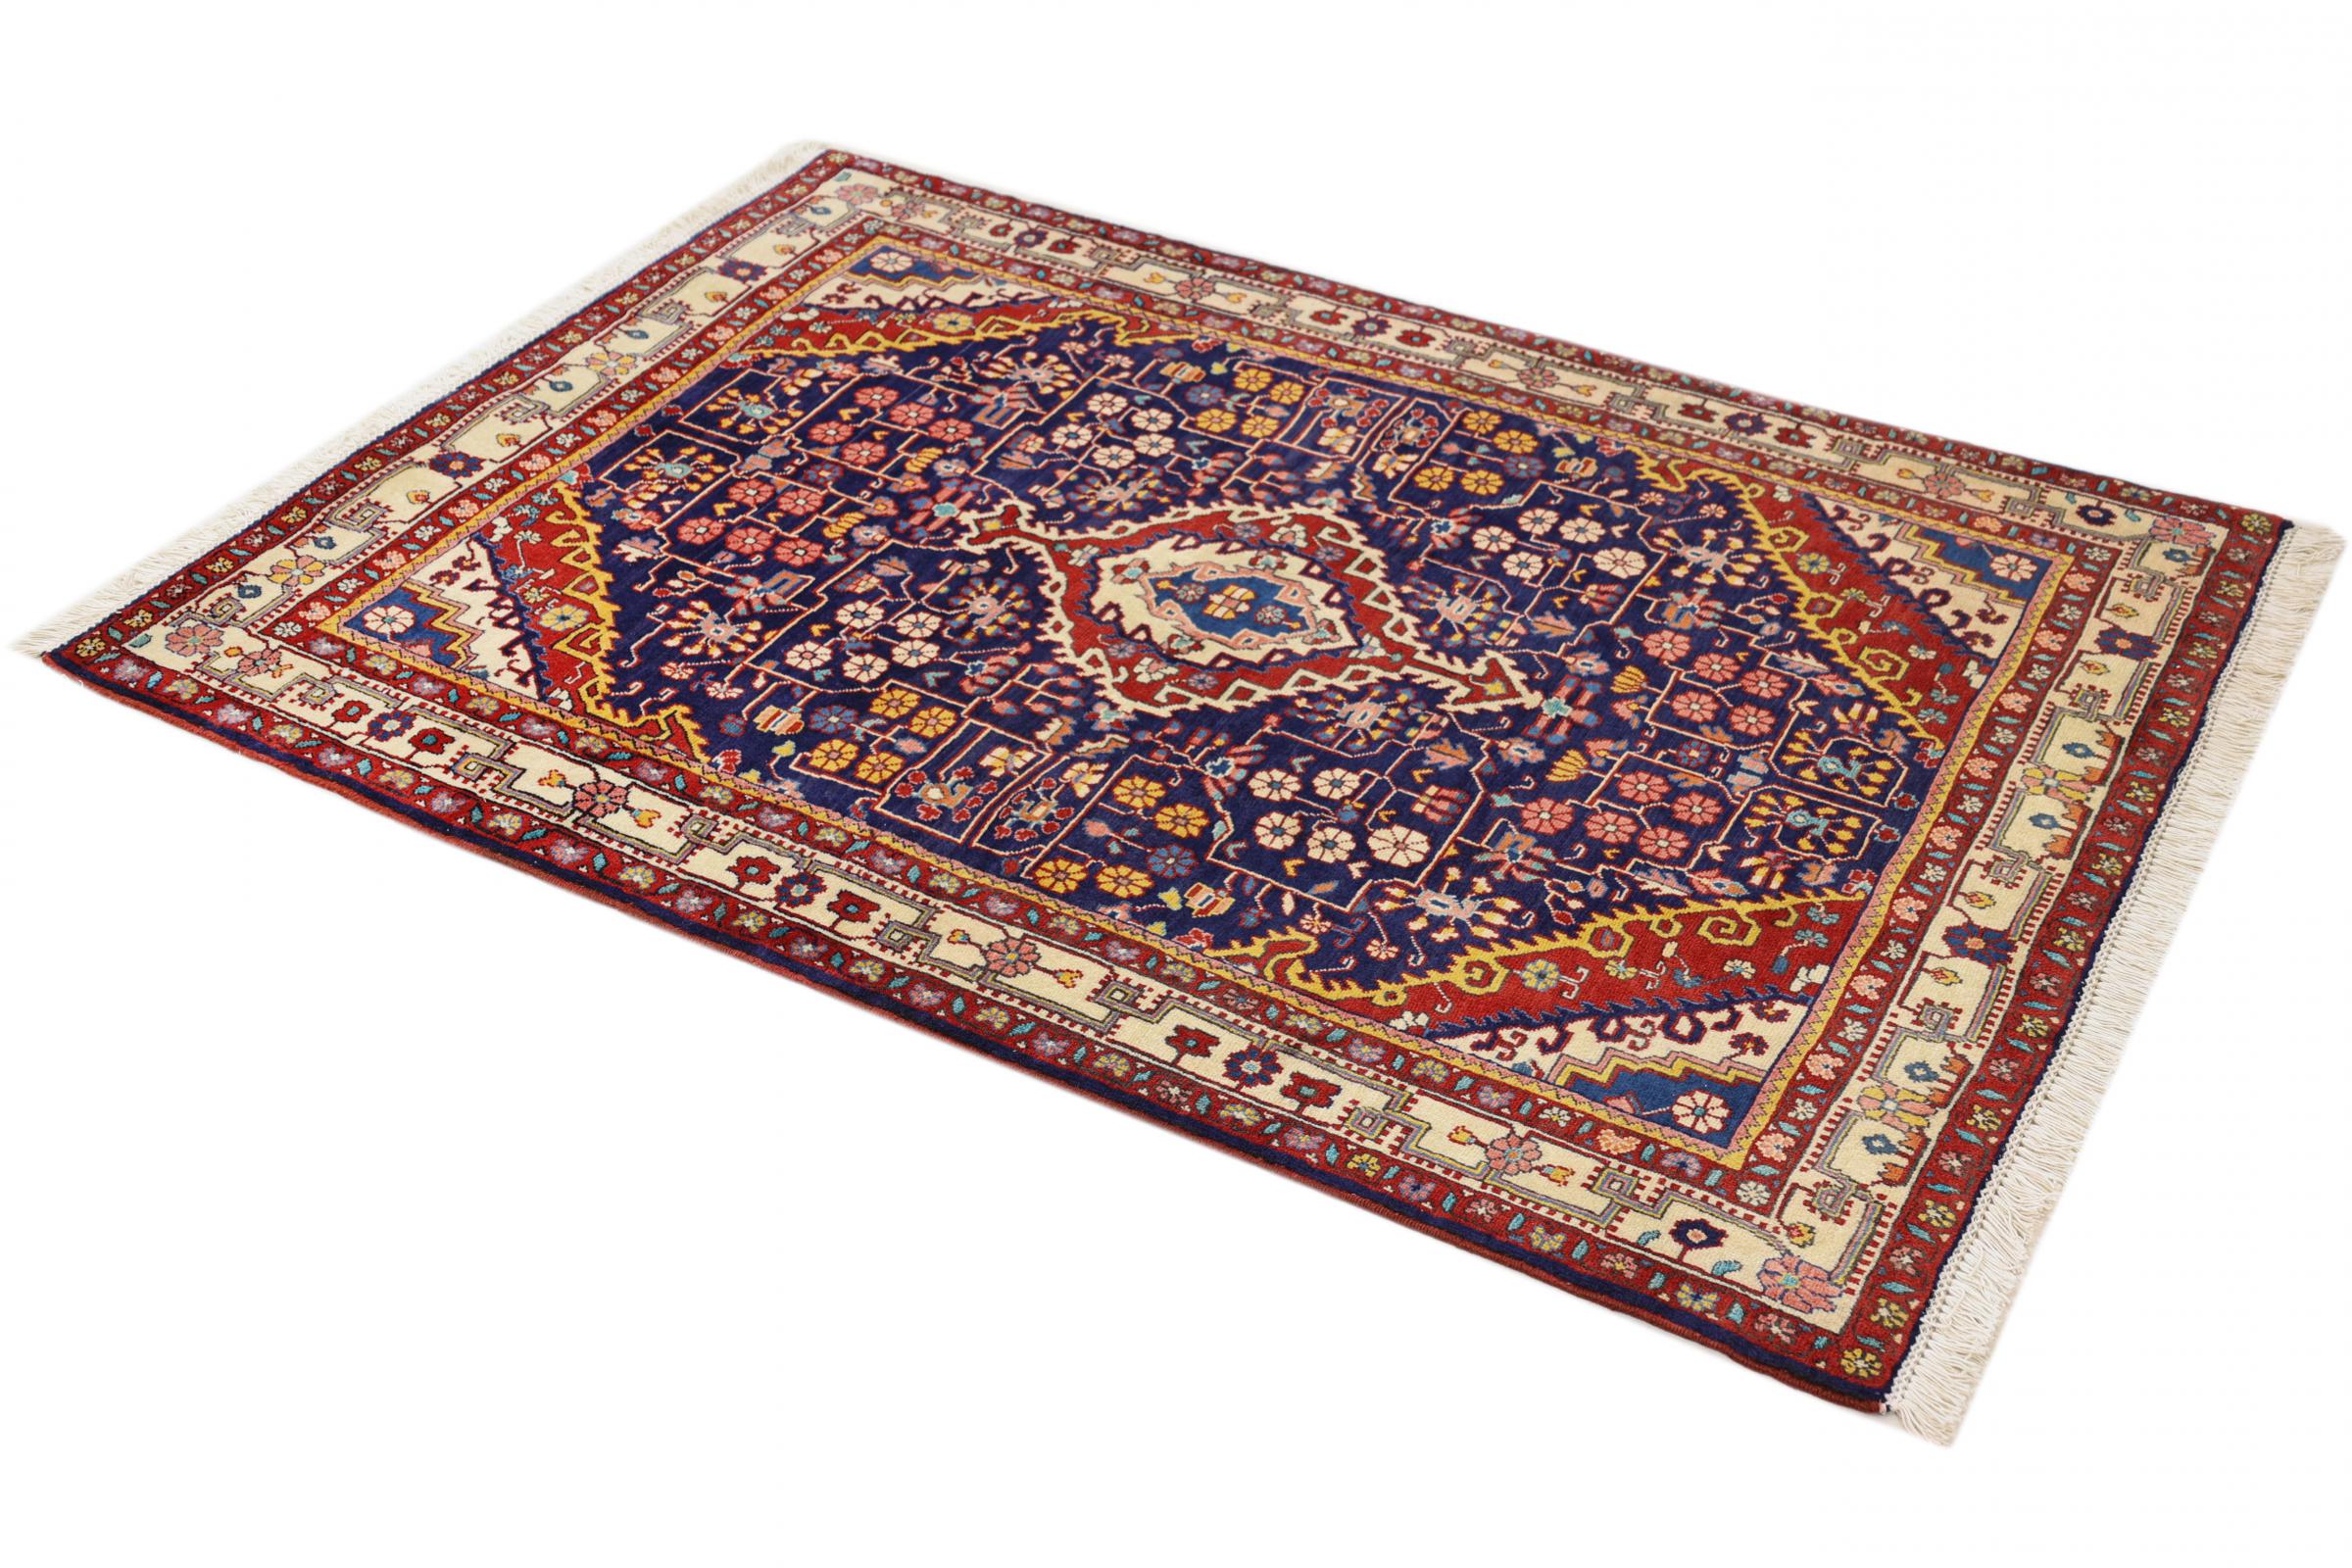 Brujerd 153x107 ID198483  NainTrading: Oriental Carpets in 150x100